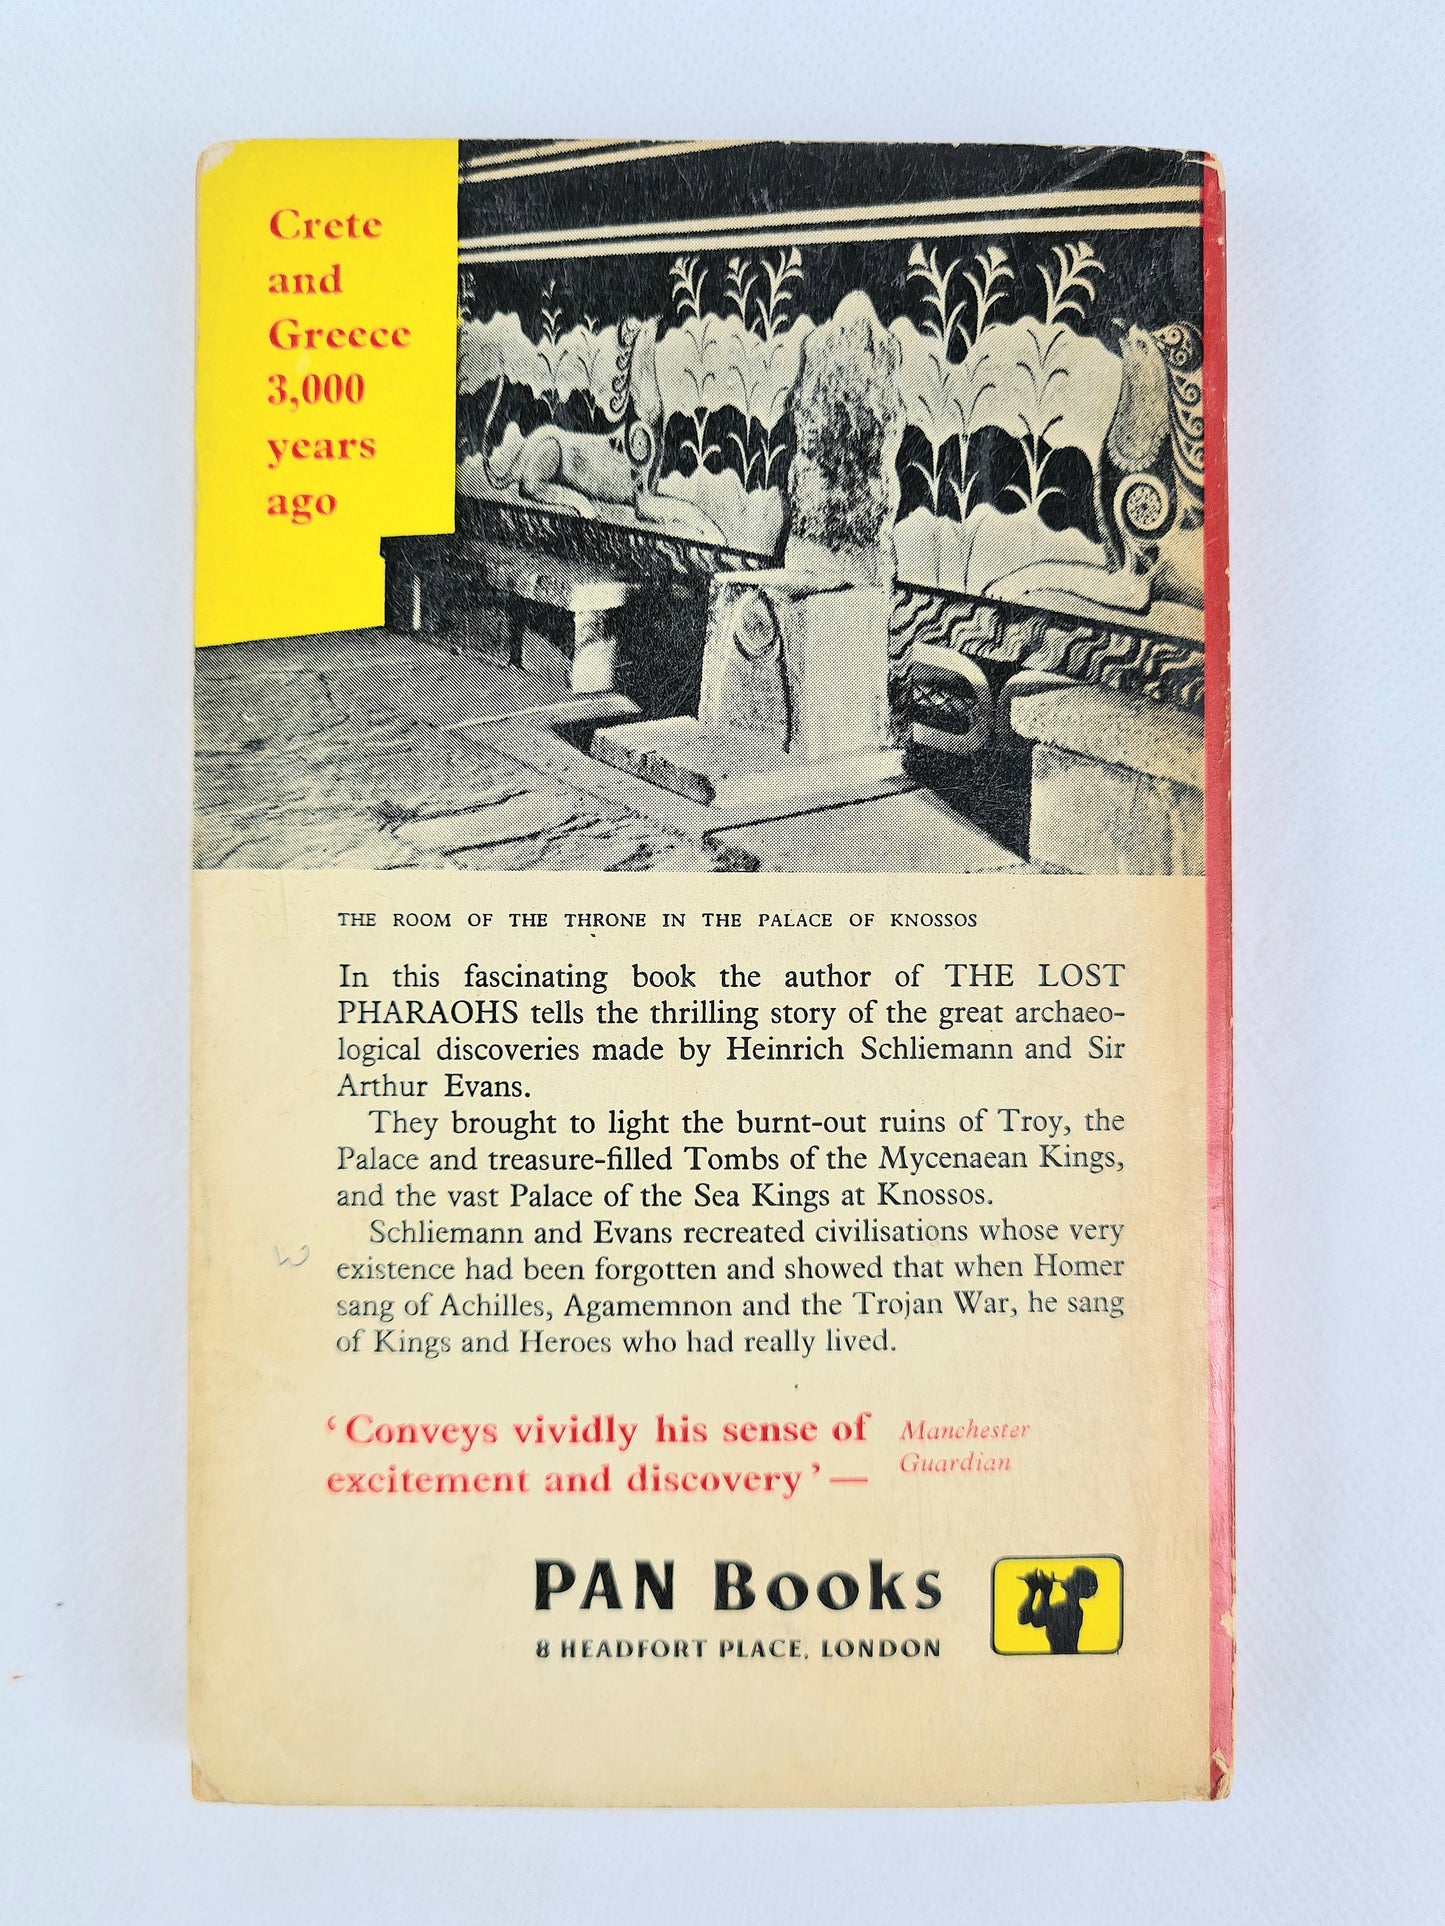 The Bull Of Minos by Leonard Cottrell. Vintage Pan Books GP36. Vintage Paperbacks